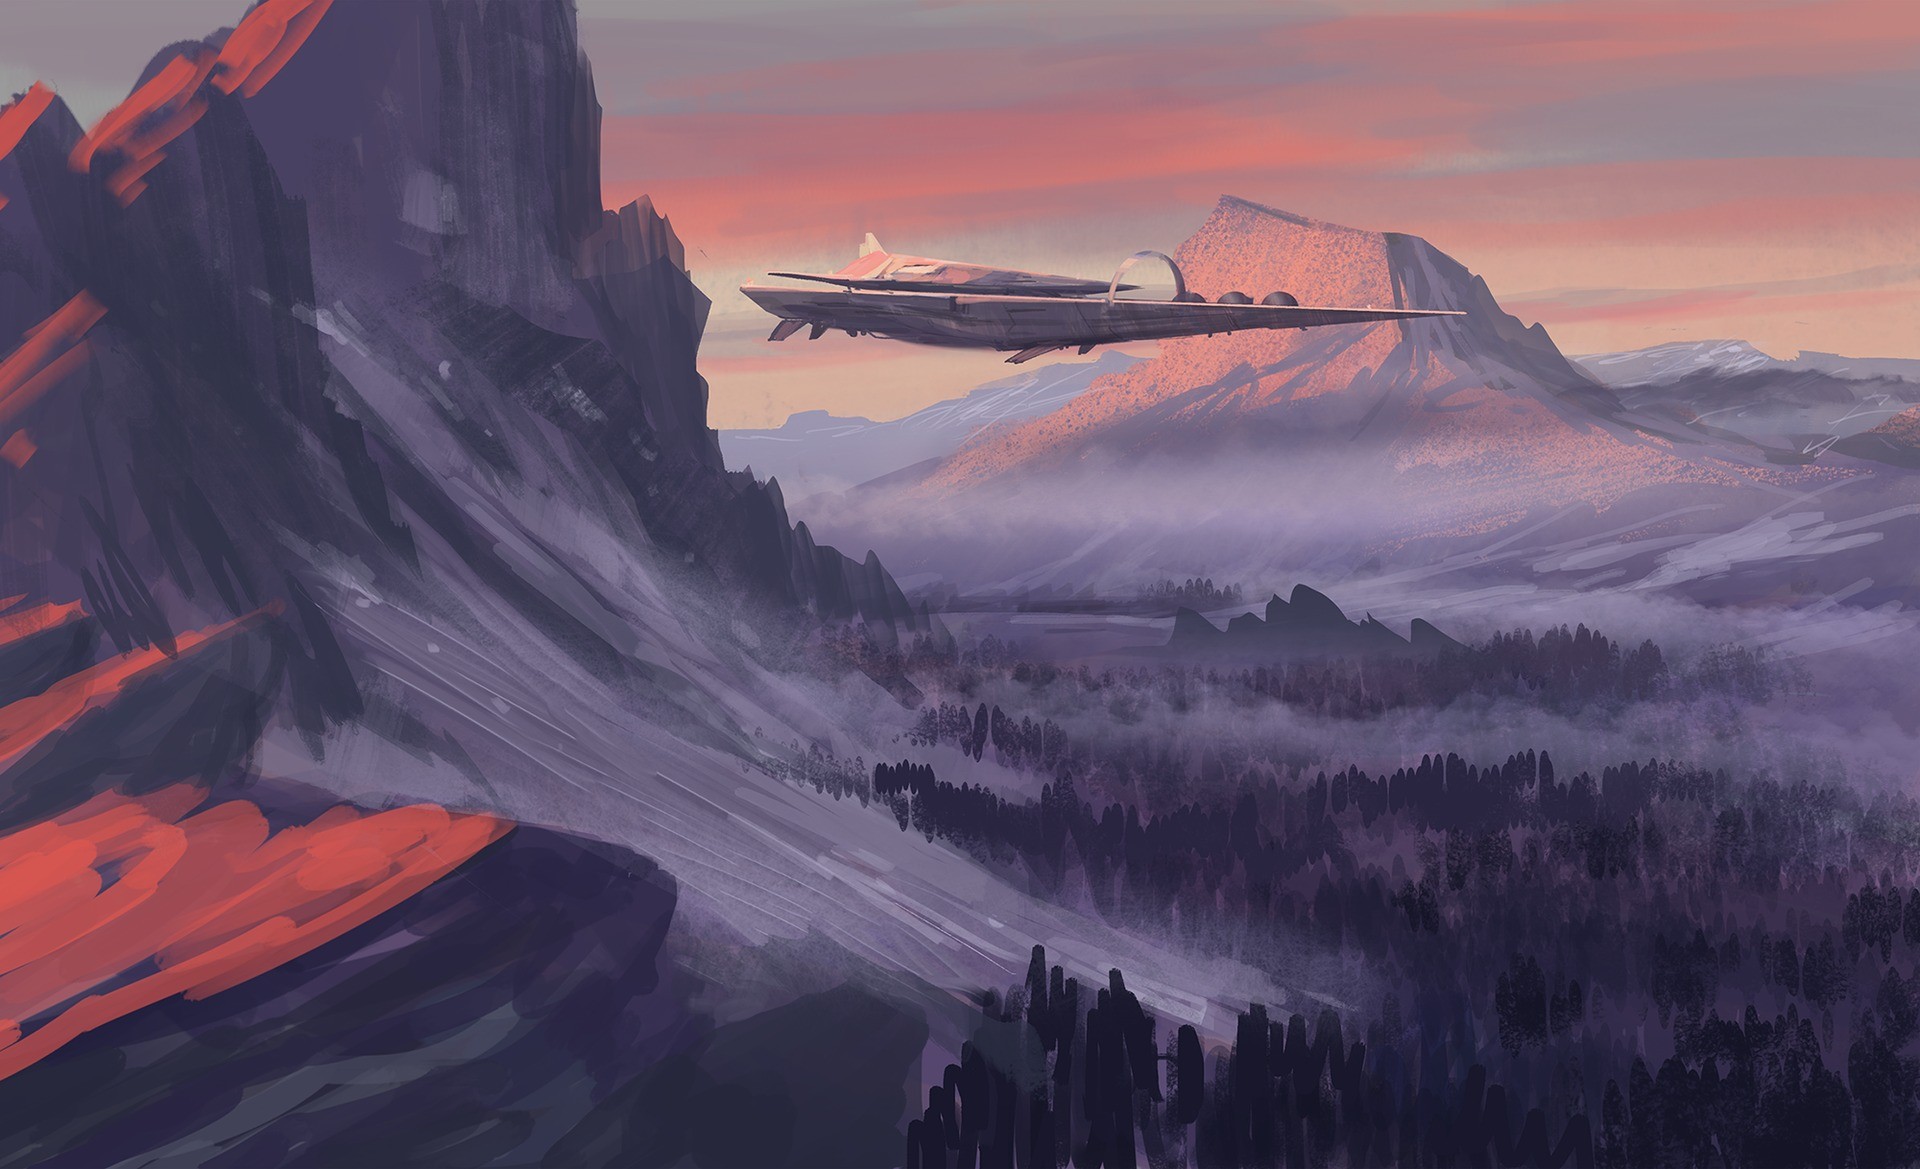 General 1920x1169 spaceship landscape sunset nature futuristic artwork digital art mountains vehicle